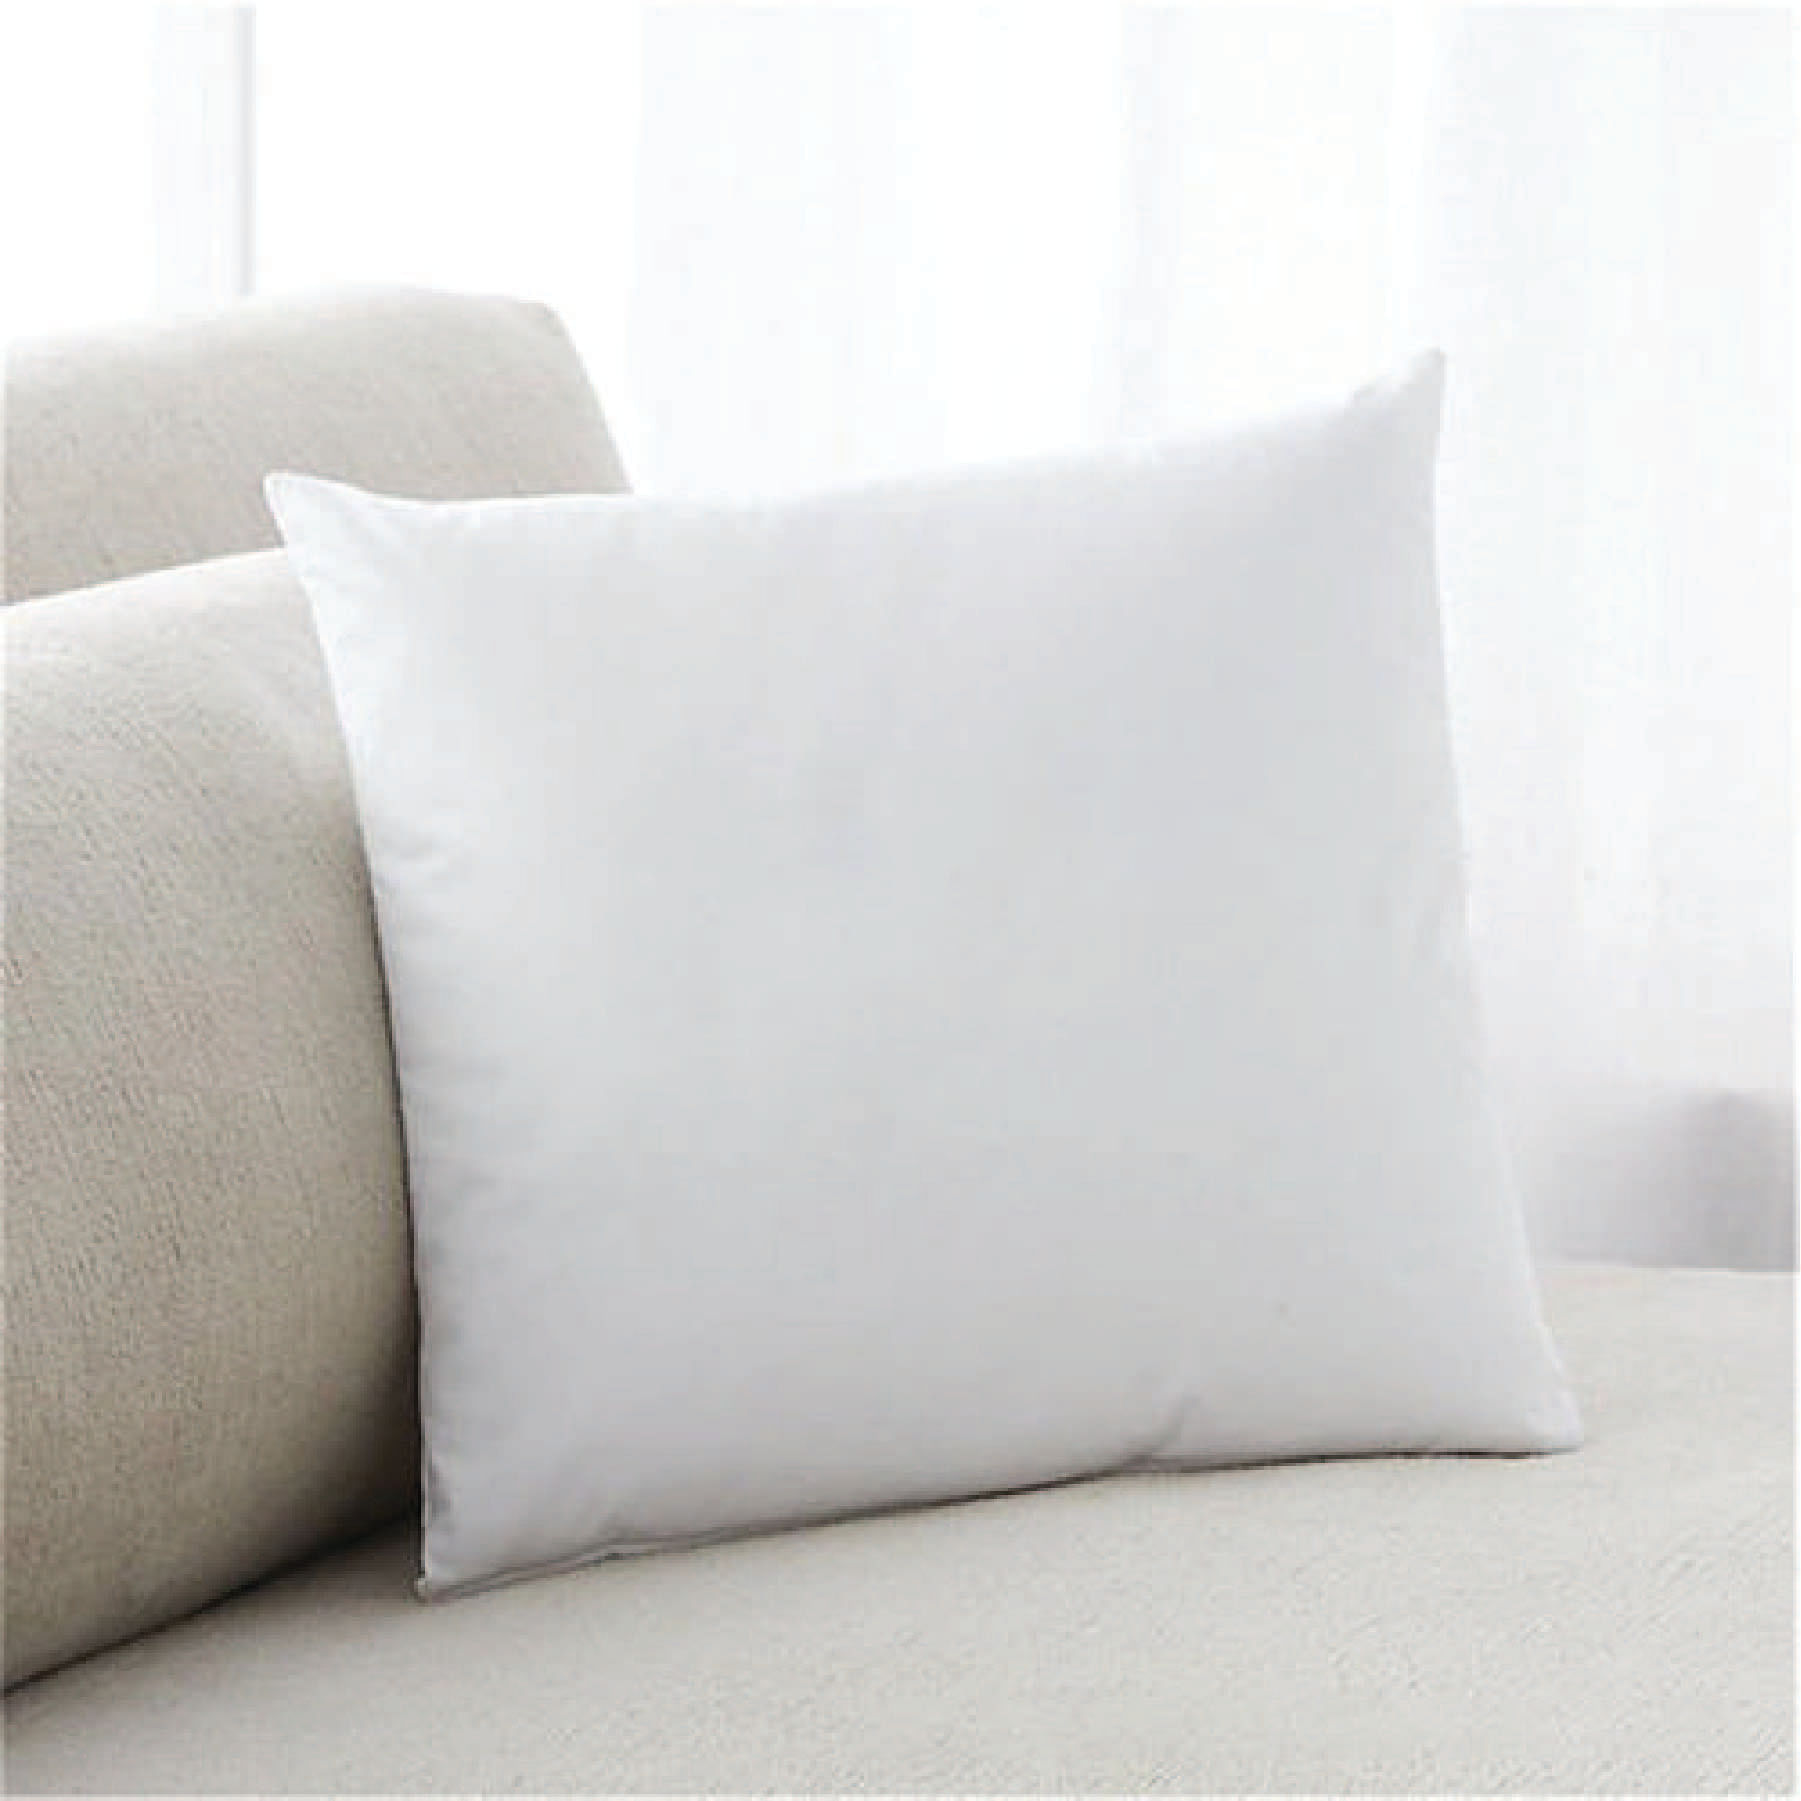 Stylo Cushion Filler 40x40 Cm in White Colour